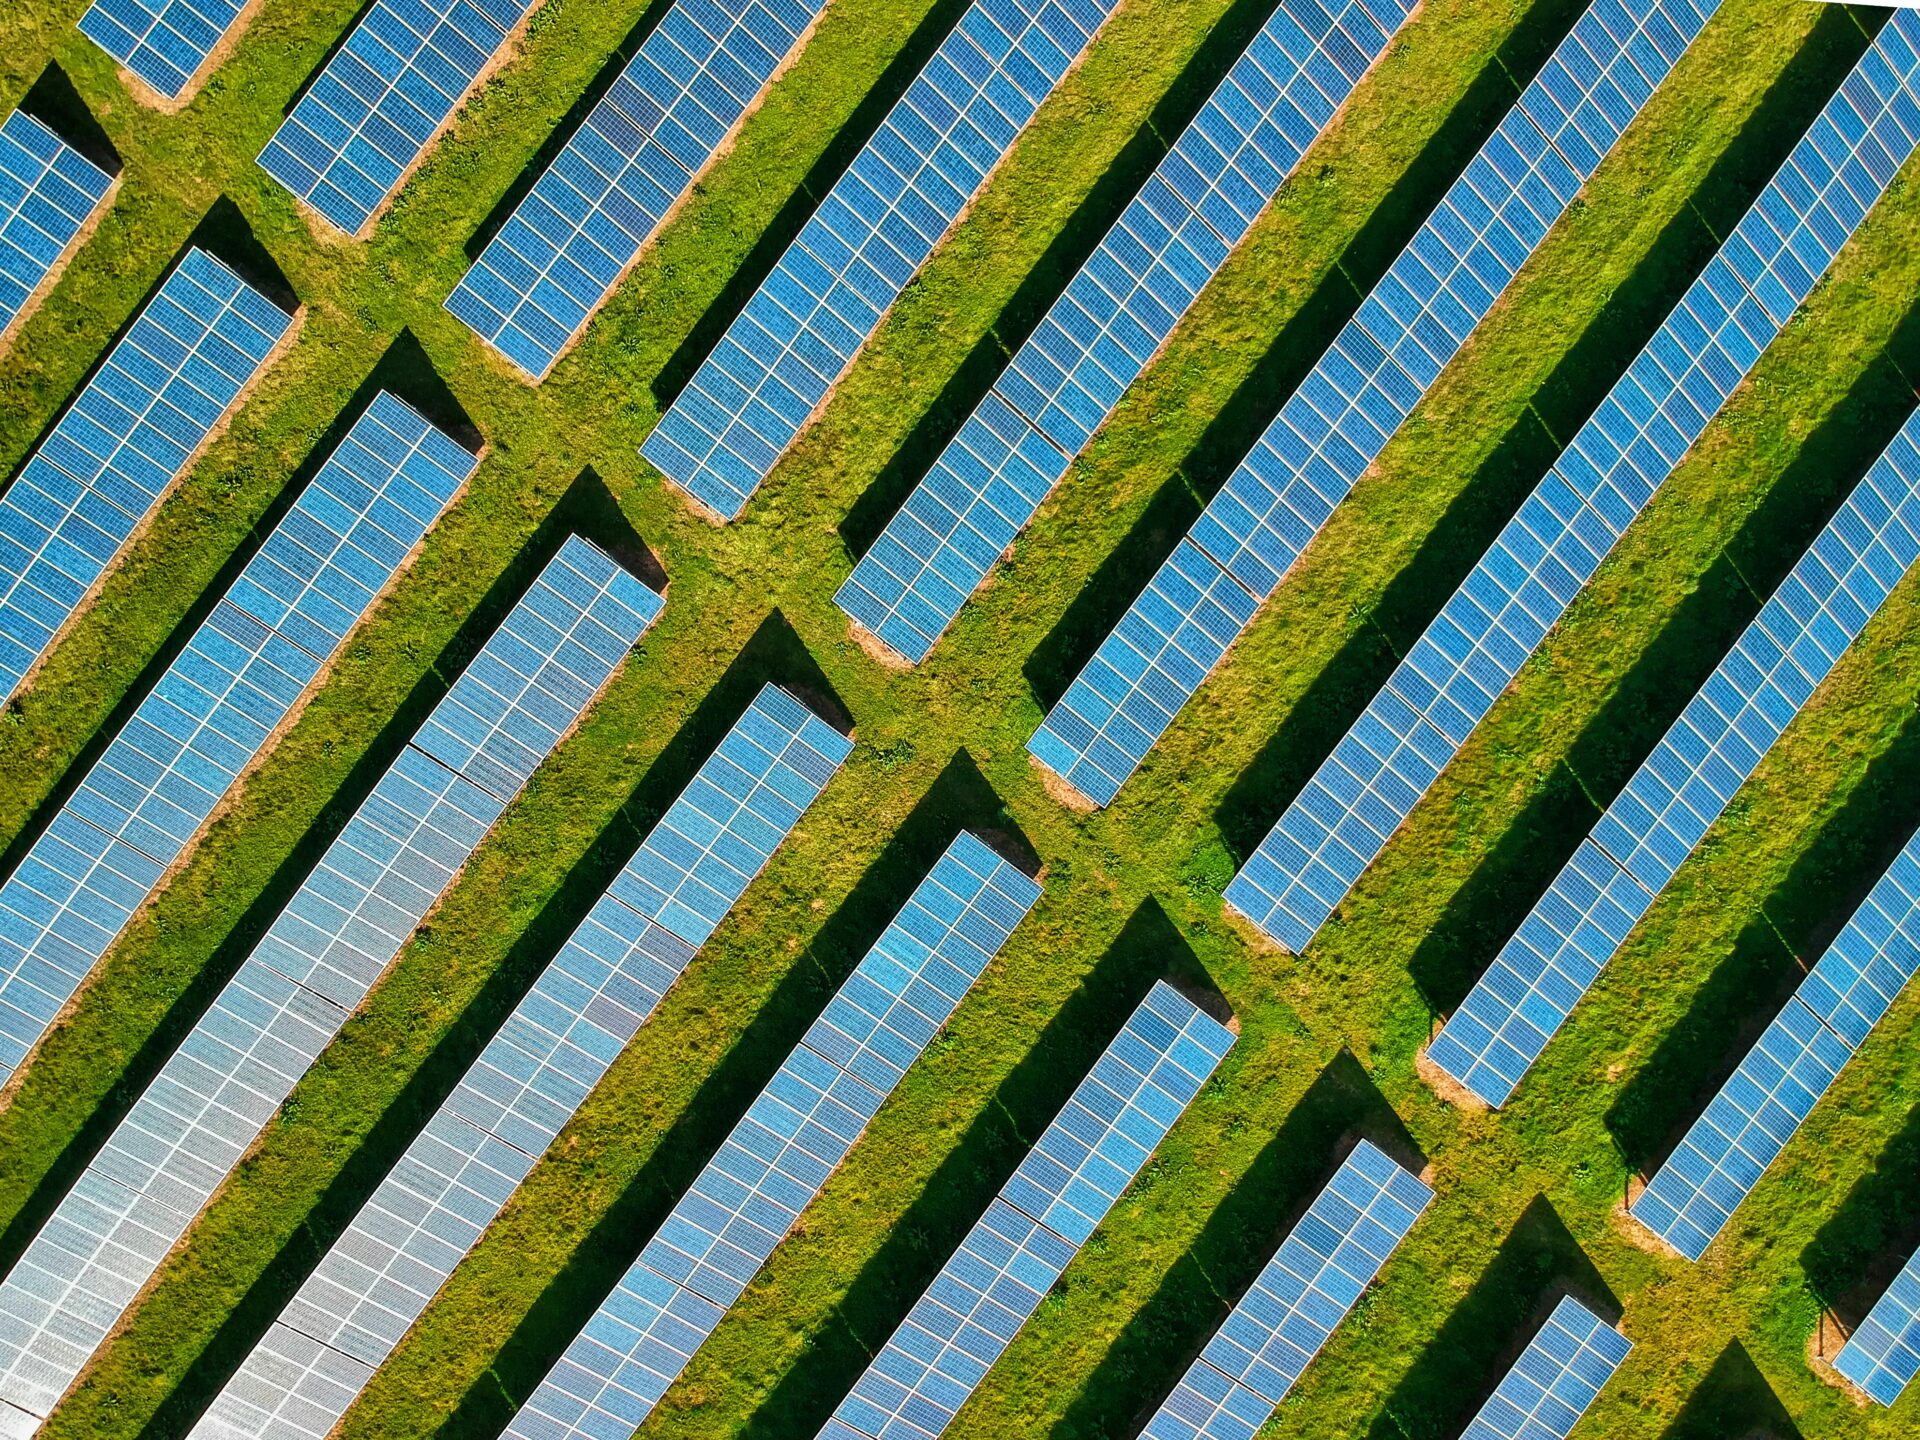 Aerial view of solar panels on a solar farm